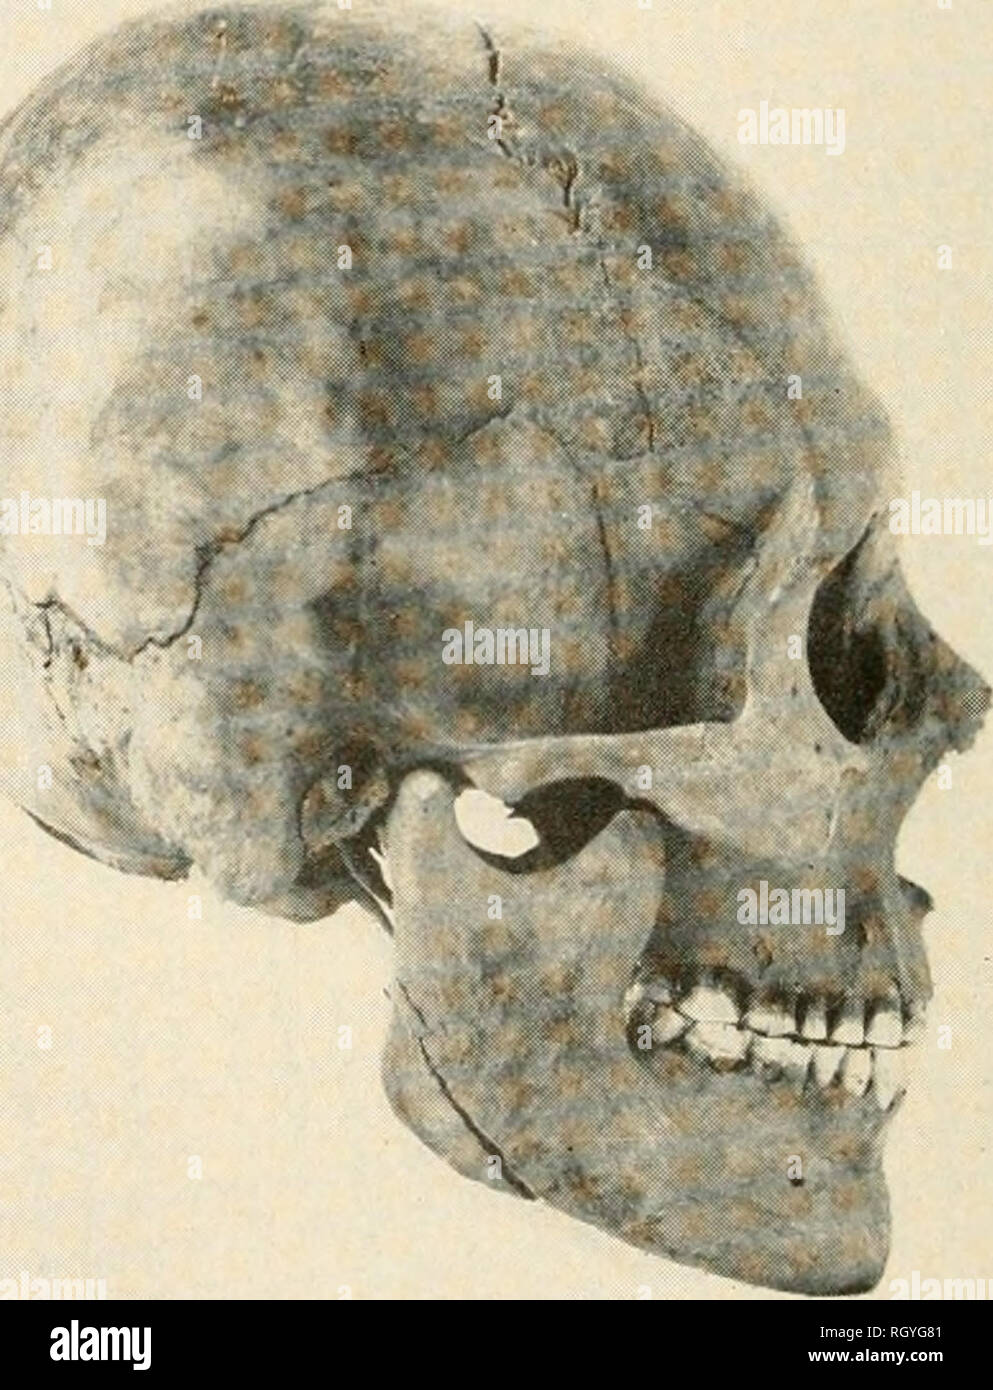 Bulletin. Ethnology. Berrlan's Island skulls. Upper, No. 5, old